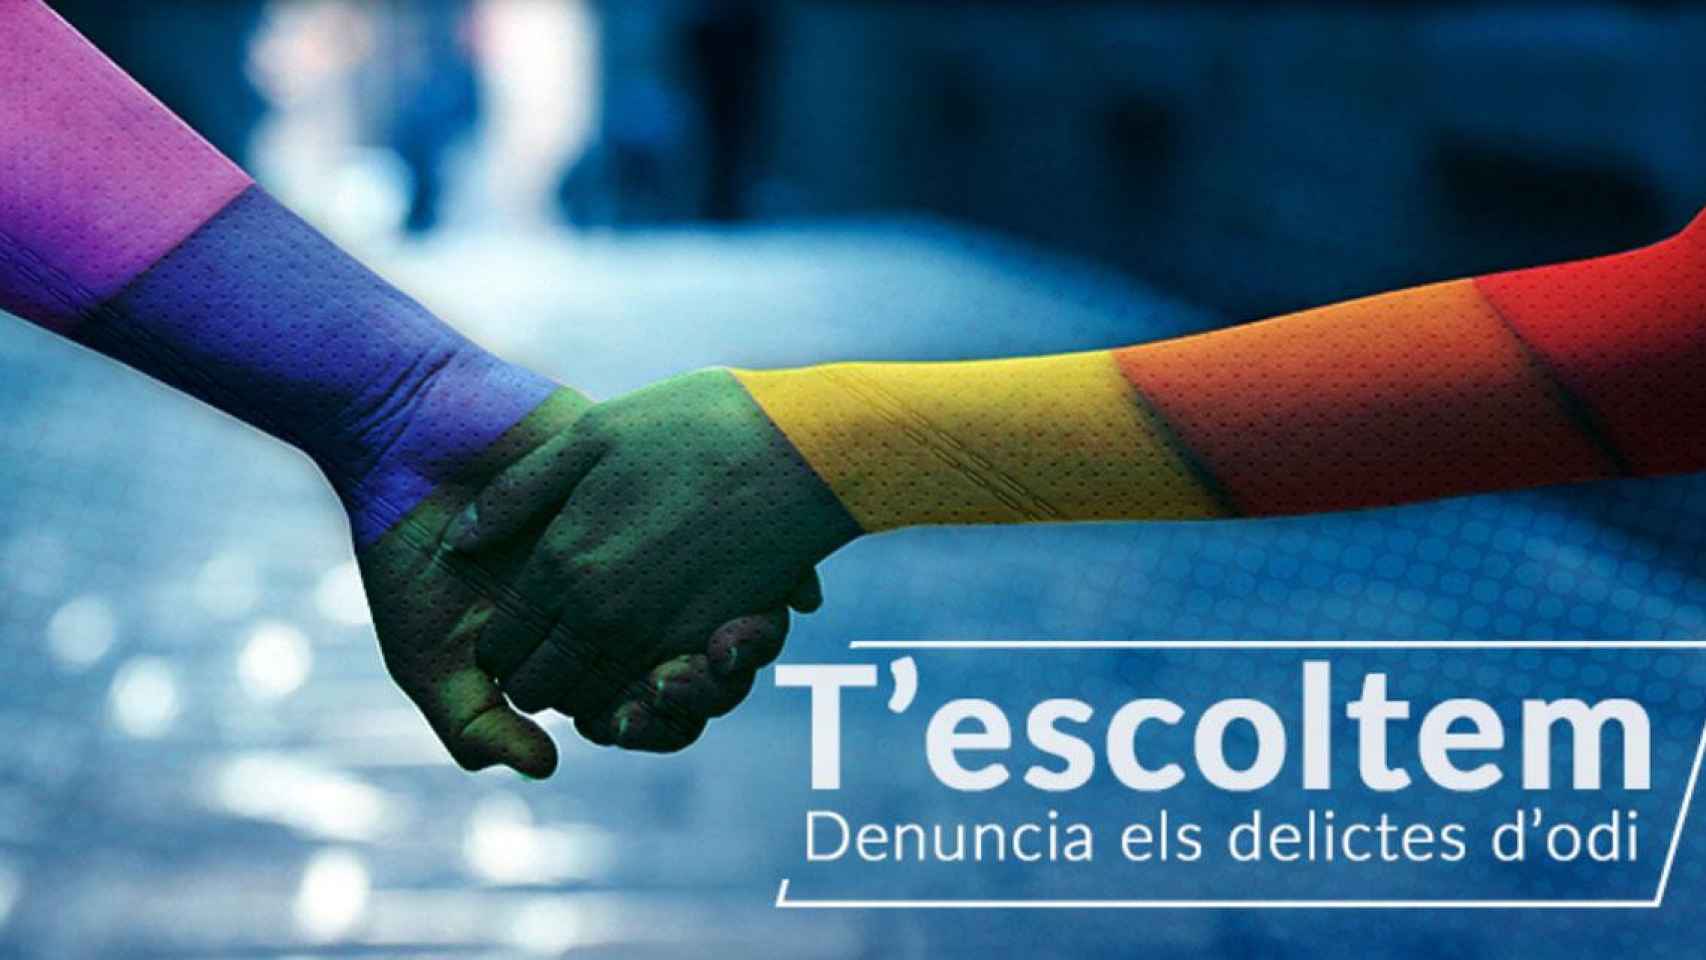 Cartel de Mossos d'Esquadra contra los ataques homófobos / INTERIOR